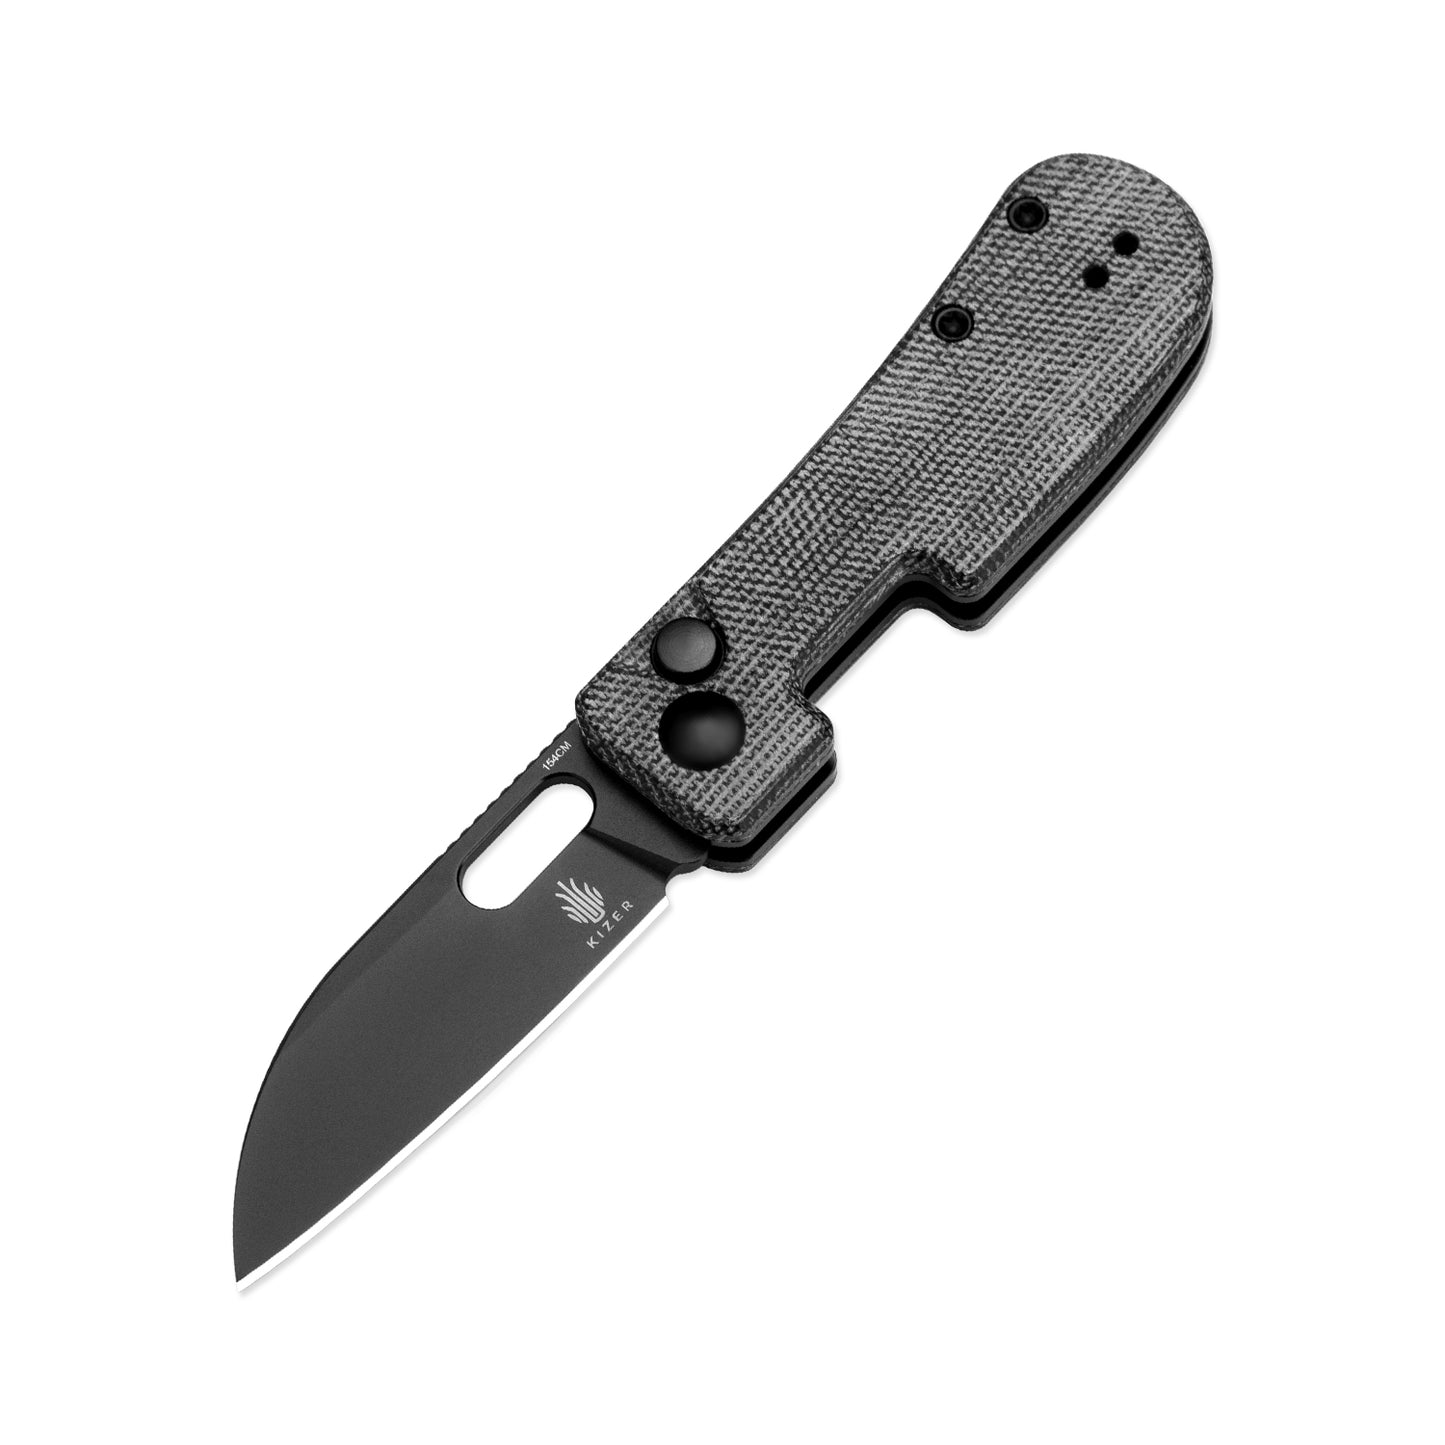 Kizer Banish 2.3" 154CM Black Micarta Button-Lock Folding Knife by Jacob Lundquist V2676C1